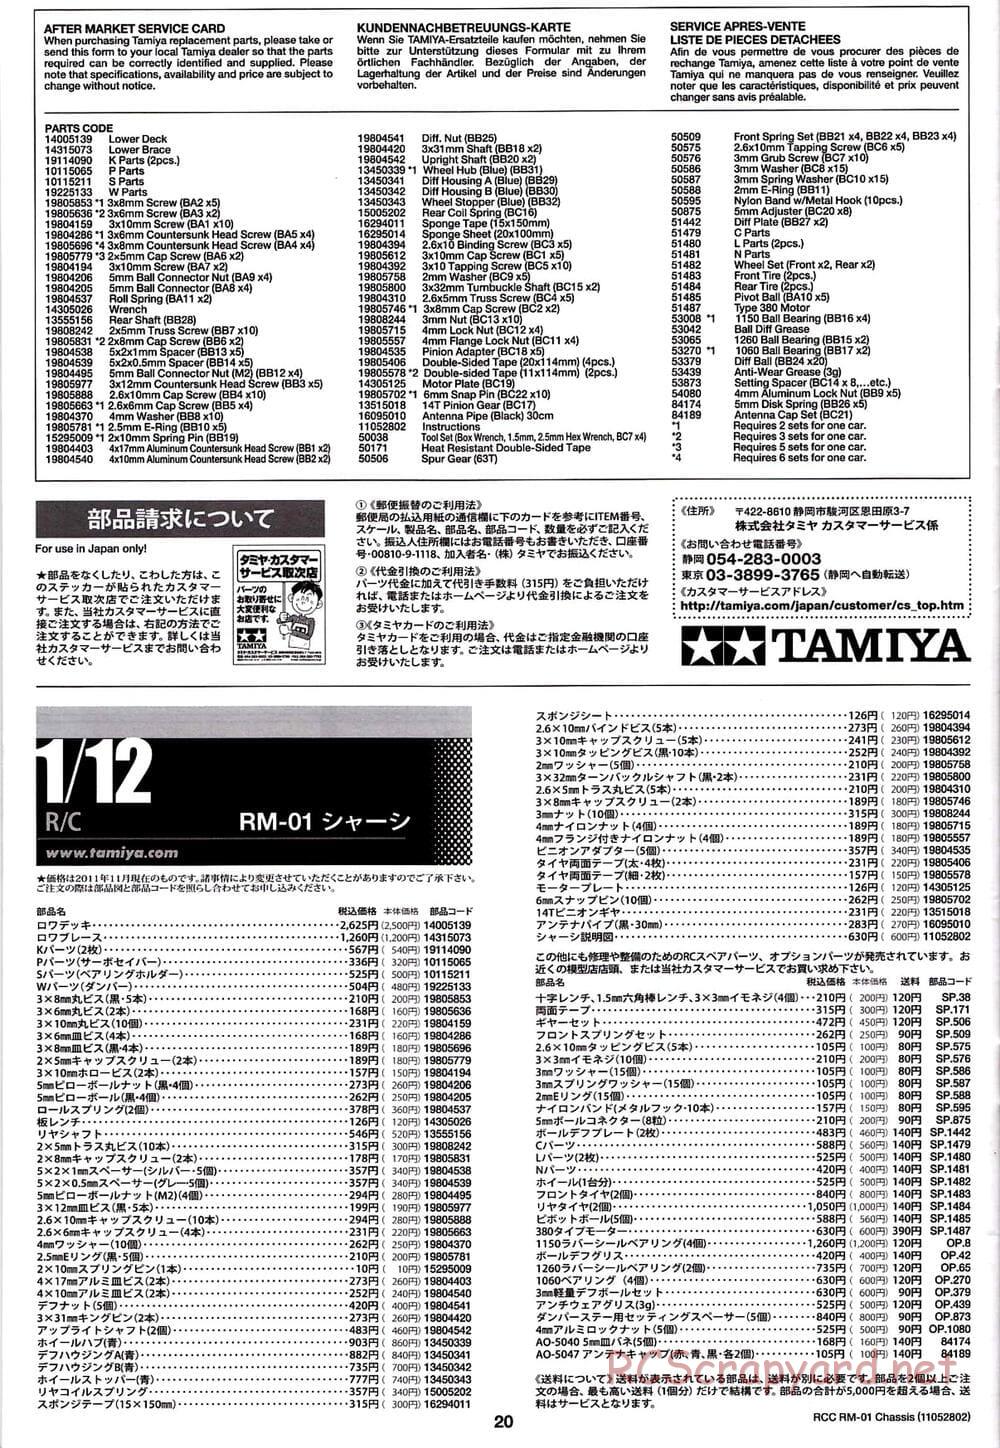 Tamiya - RM-01 Chassis - Manual - Page 20